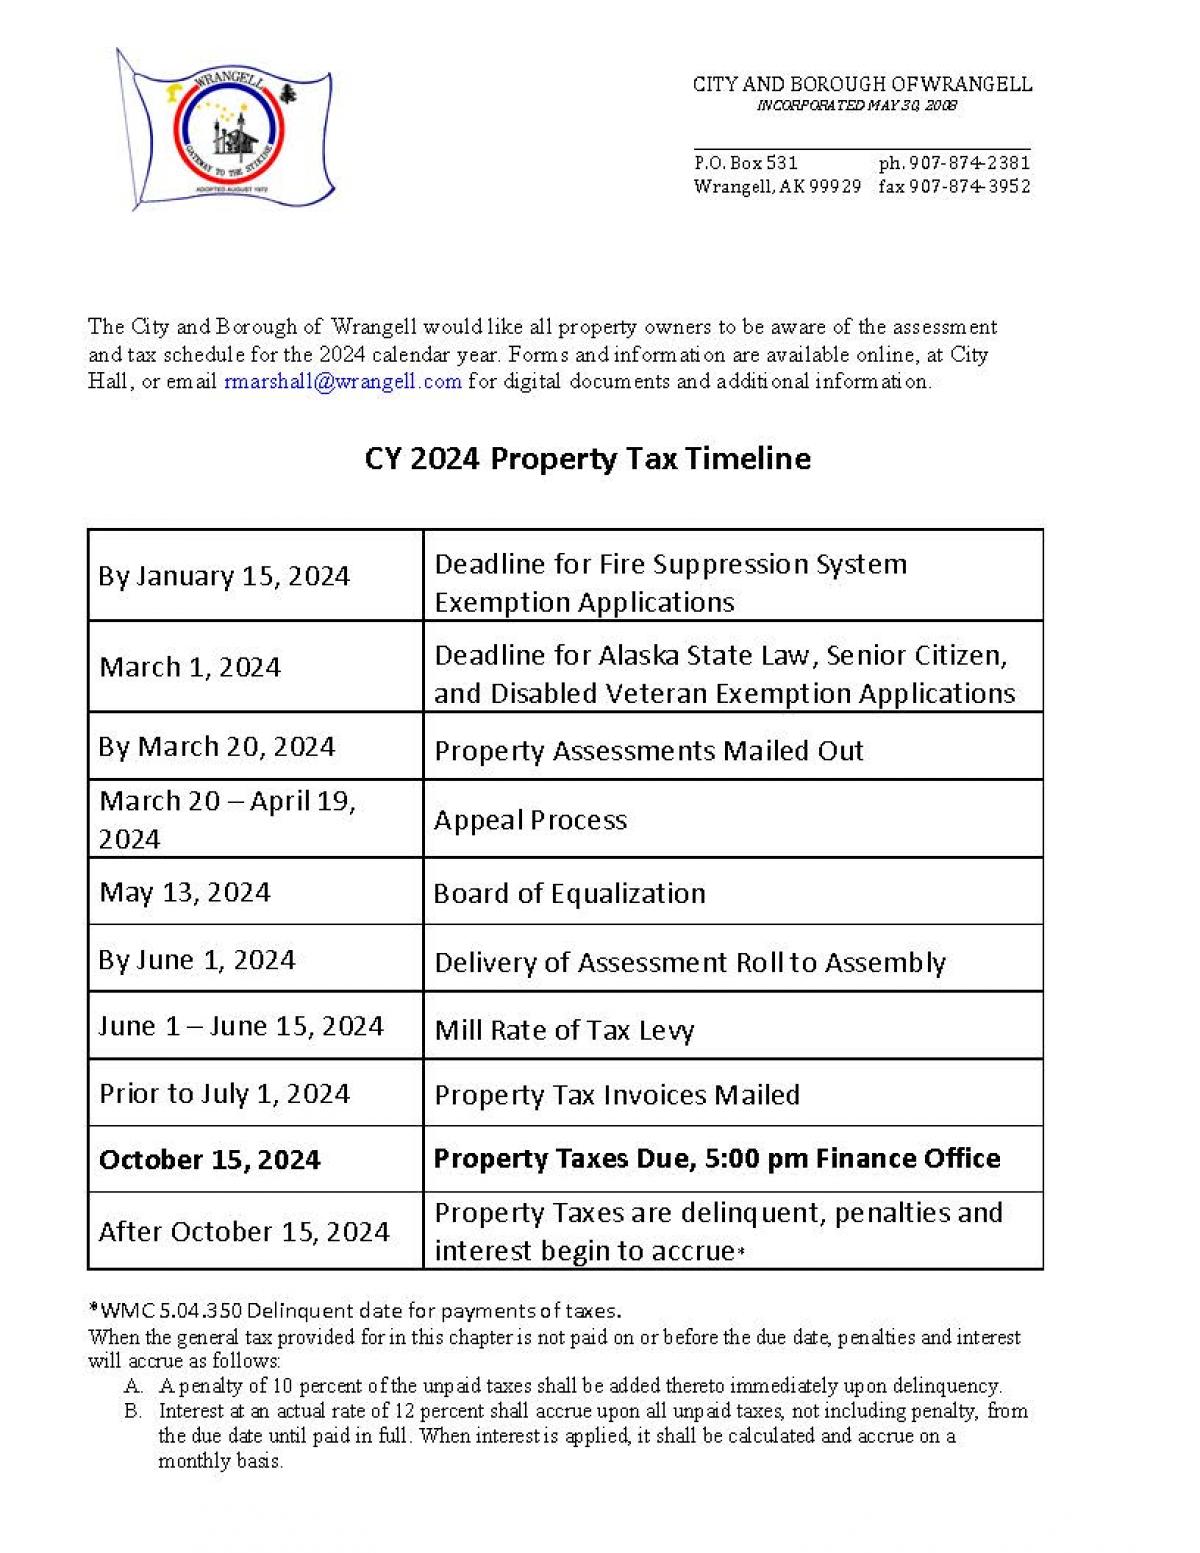 2024 Property Tax Timeline